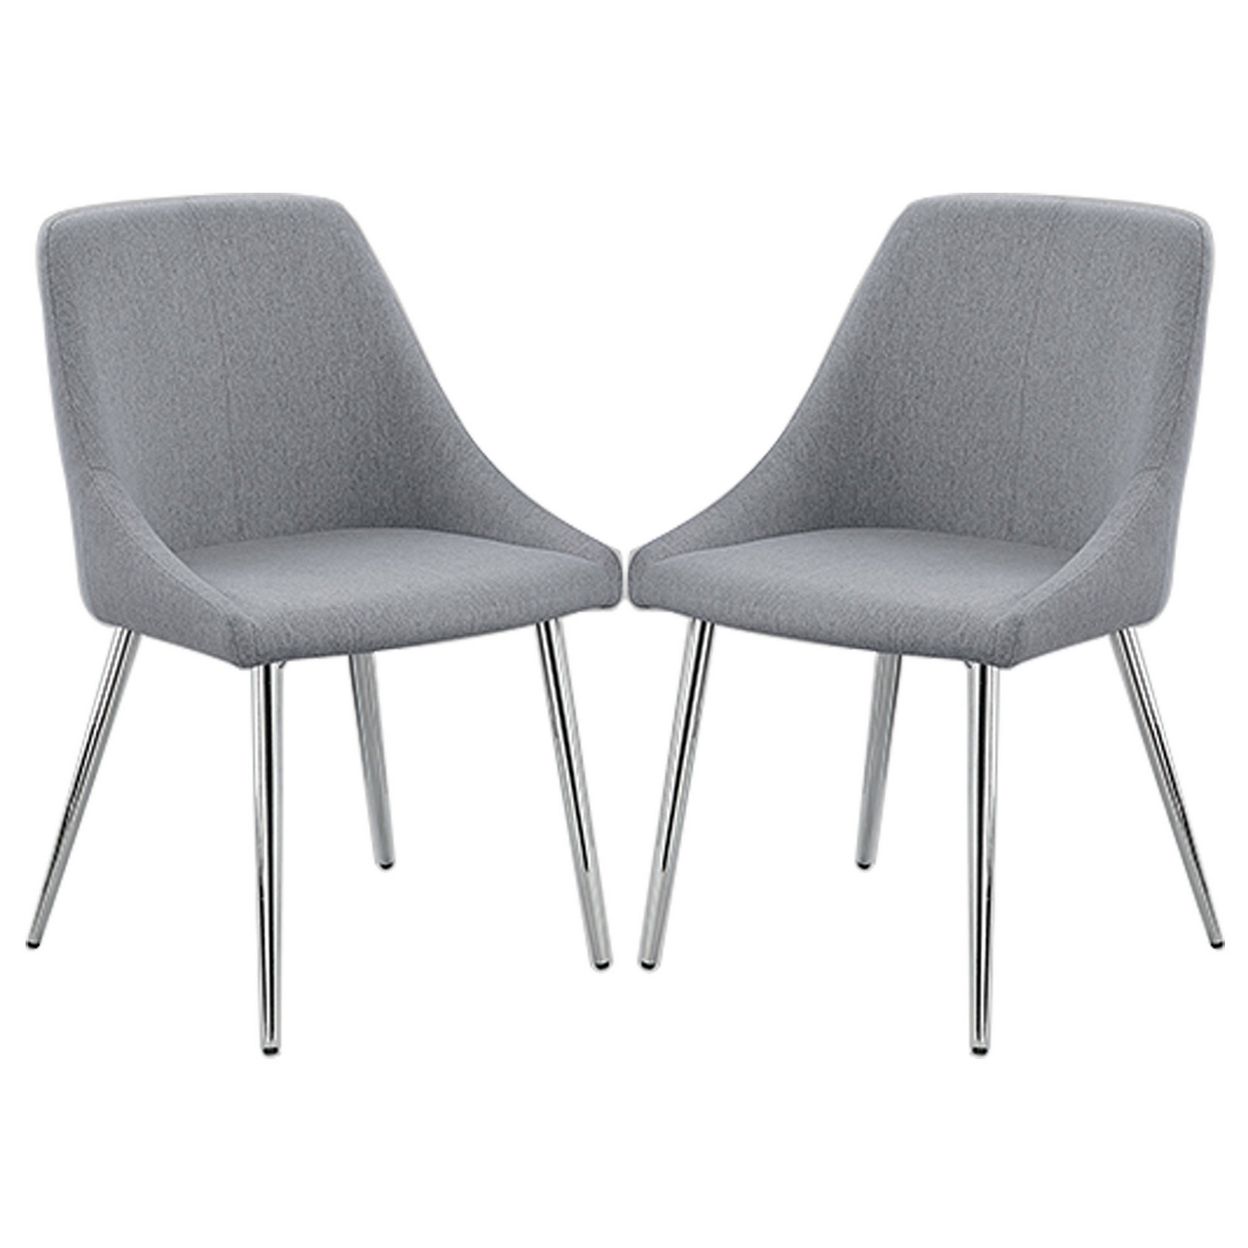 Kian 20 Inch Side Chair Set Of 2, Tapered Legs, Gray Fabric Upholstery -Saltoro Sherpi